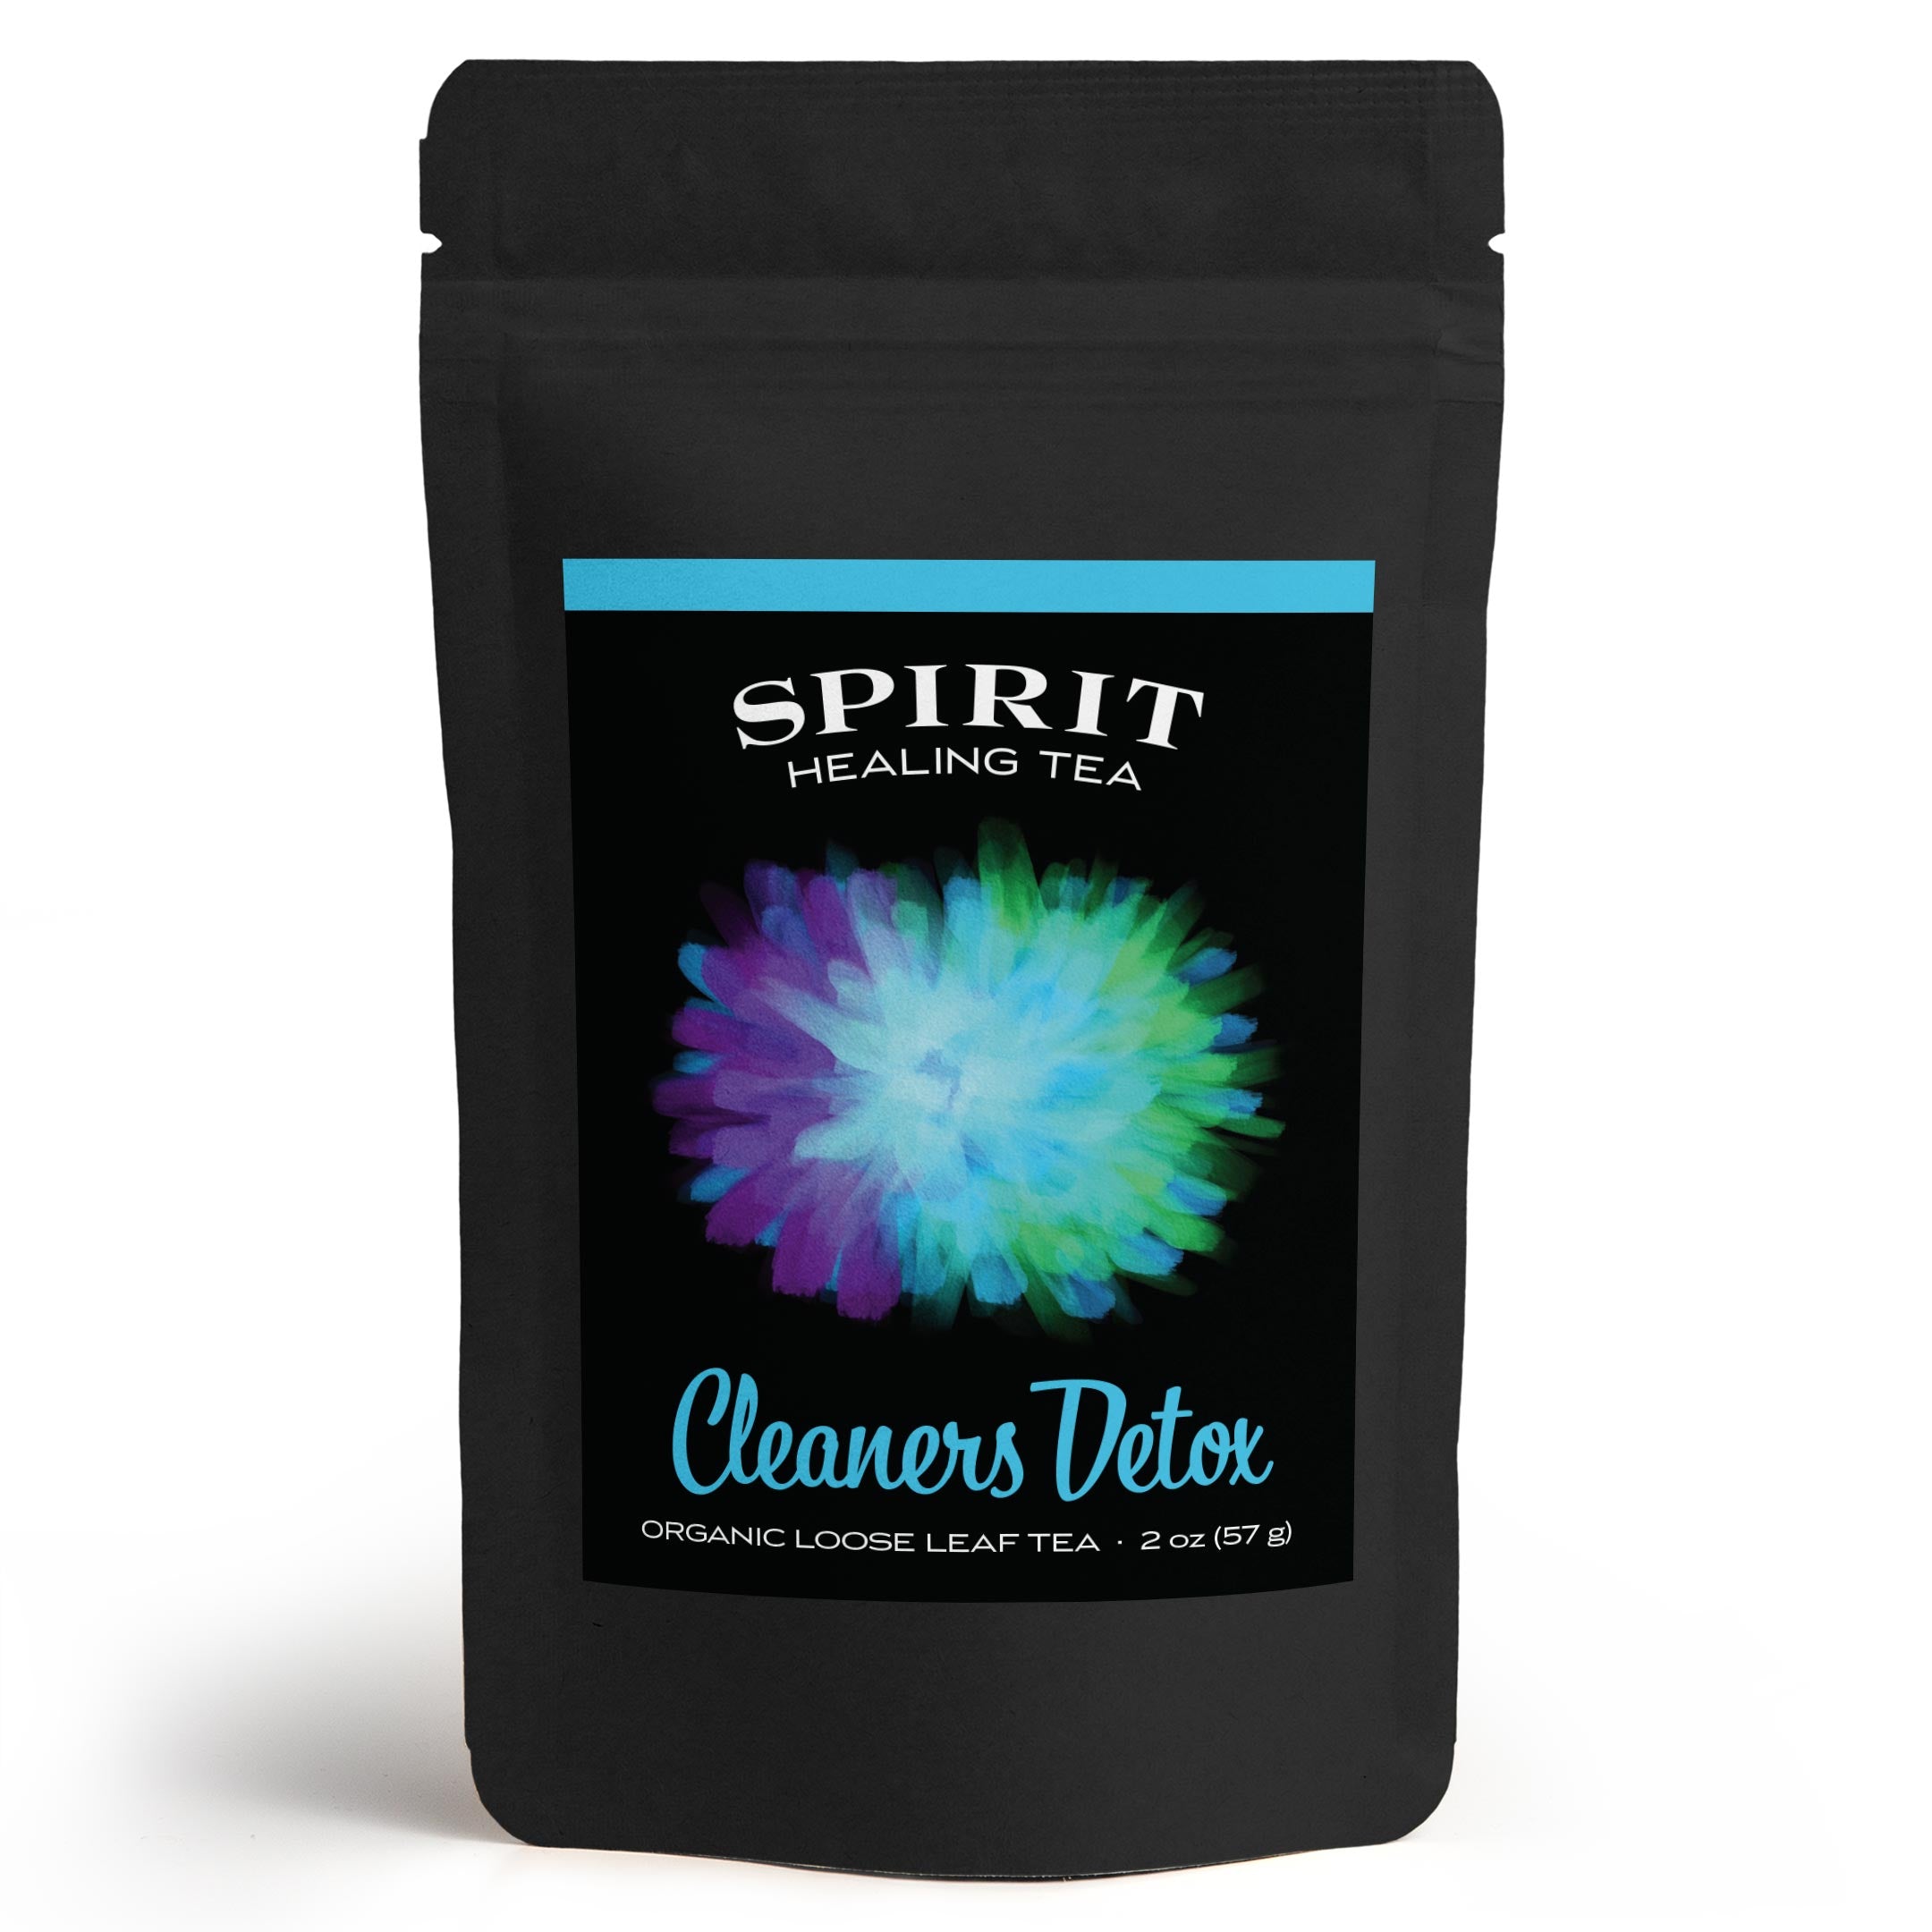 Spirit Healing Cleaners Detox Tea